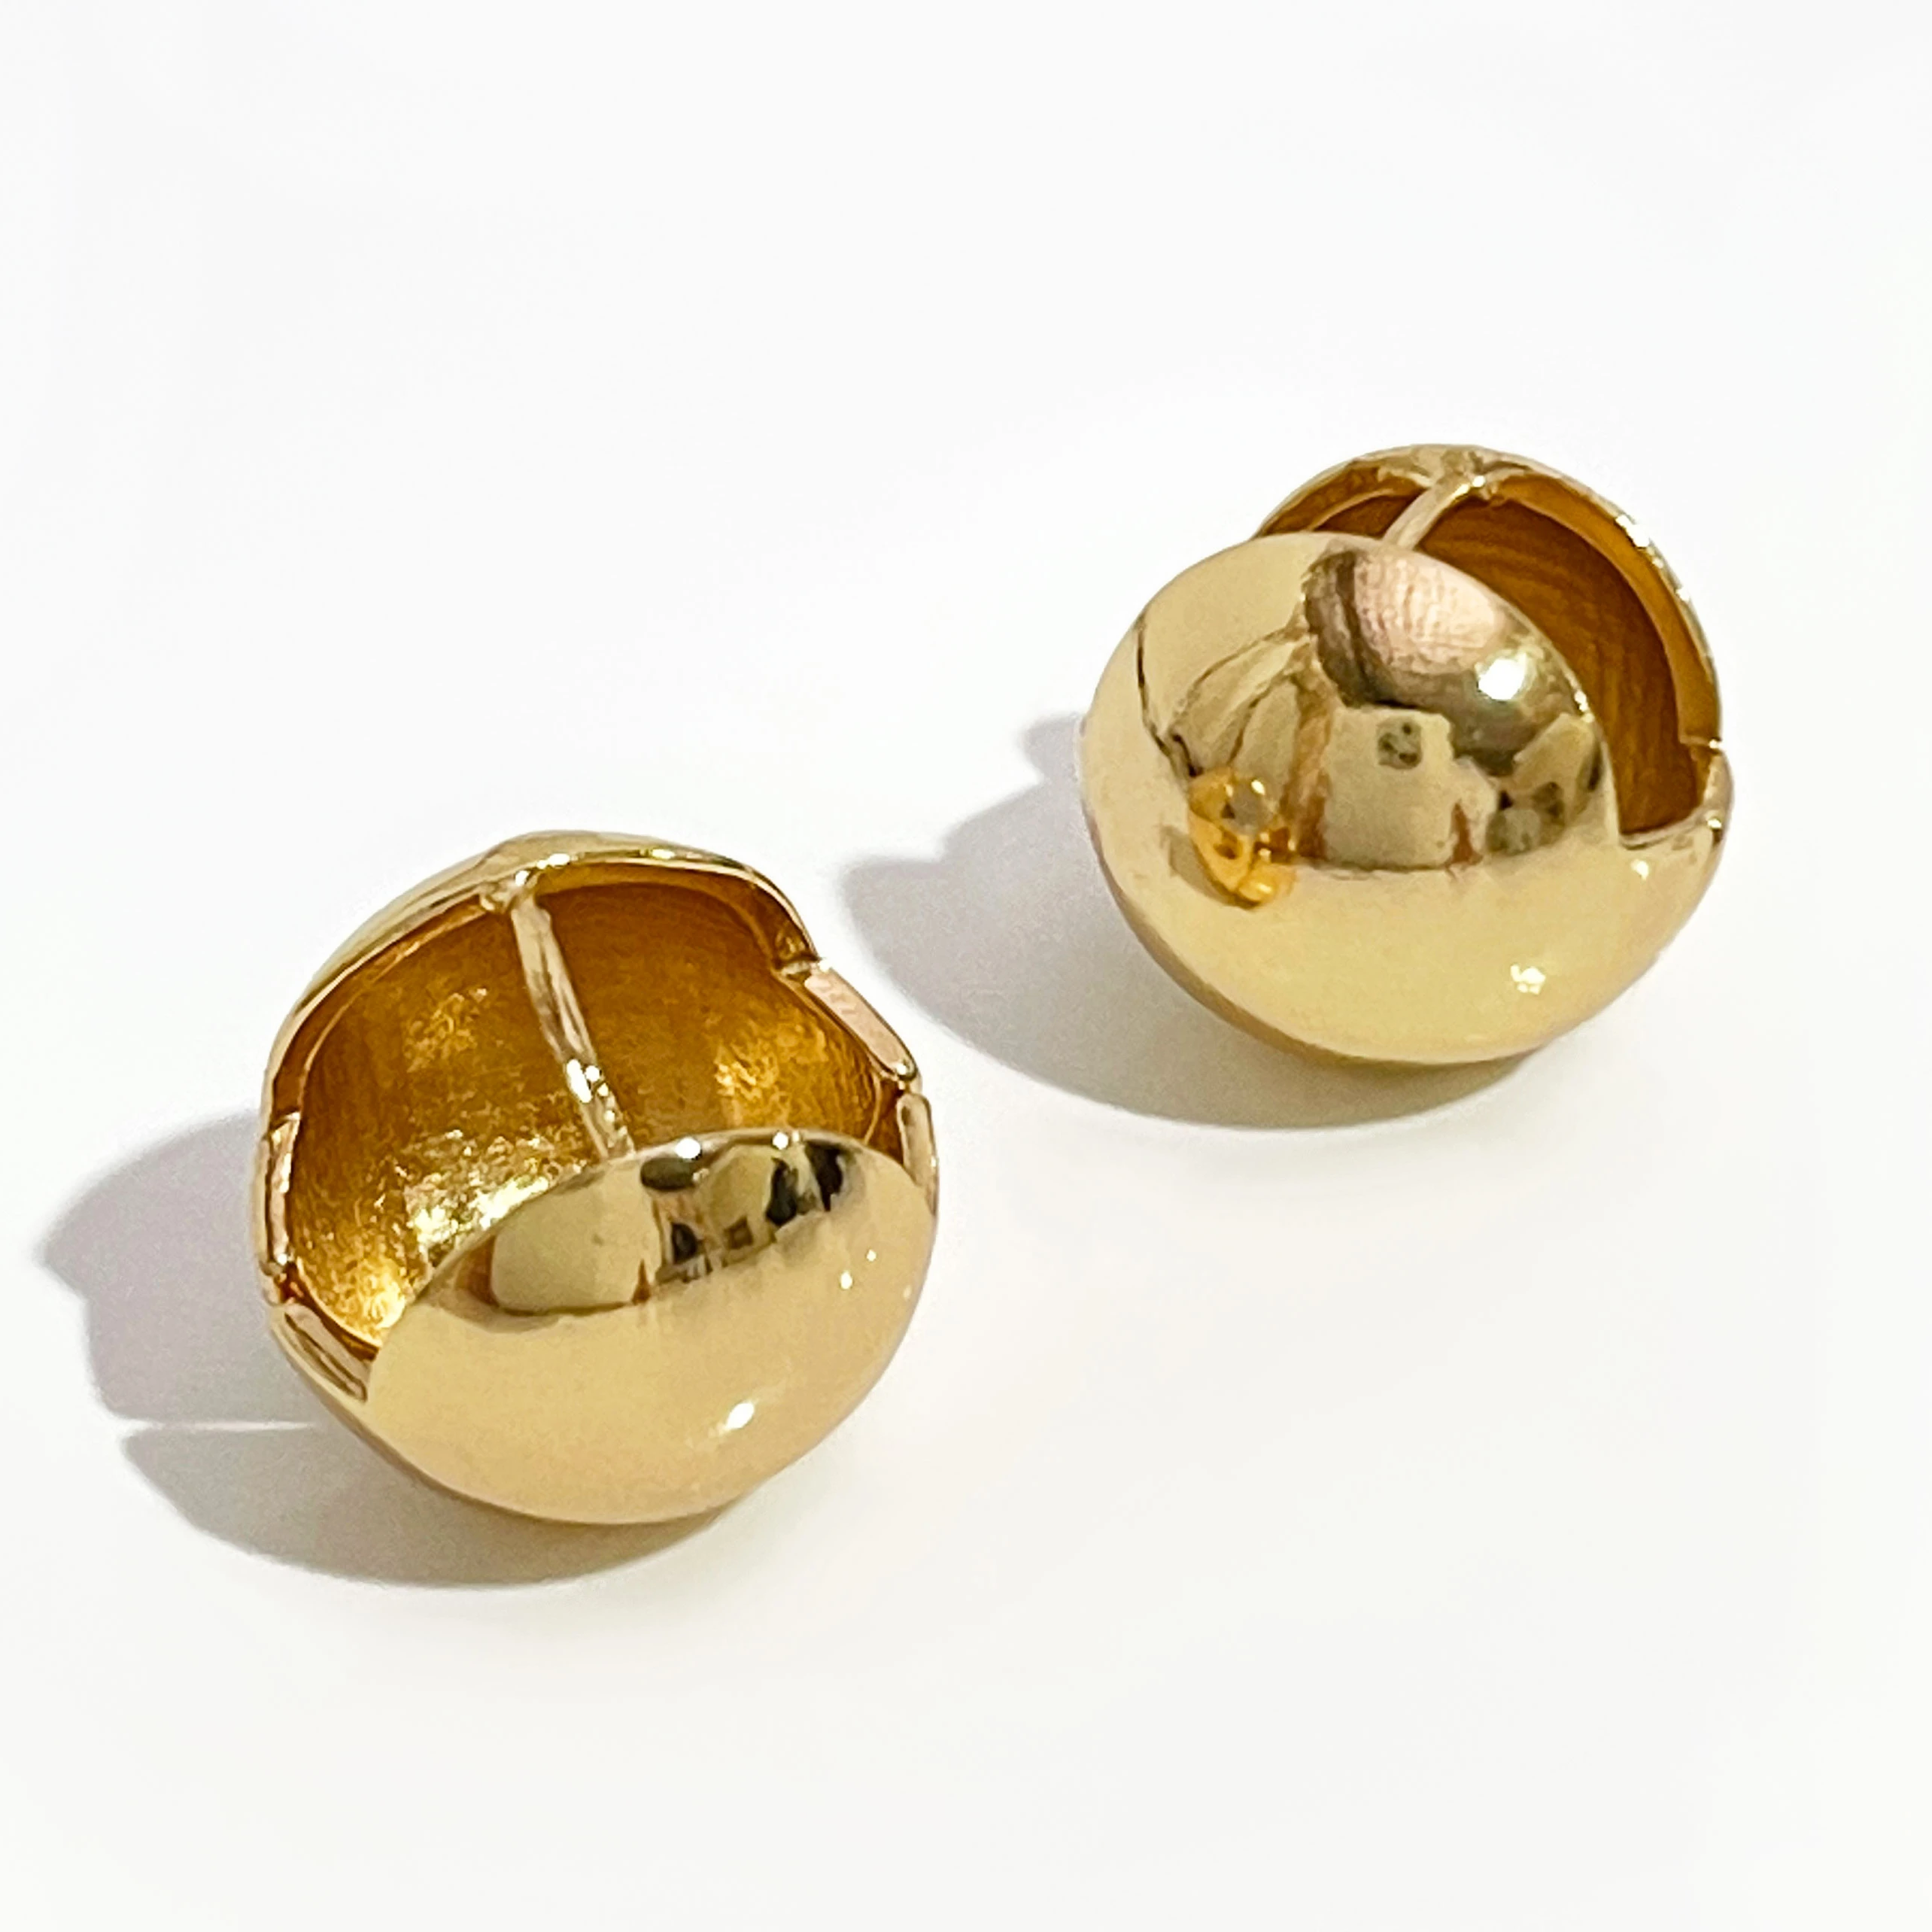 Peri'sBox 4 Designs Round Ball Geometric Earrings Textured Gold Earrings for Women Star Earrings Basket Huggie Earrings 2019